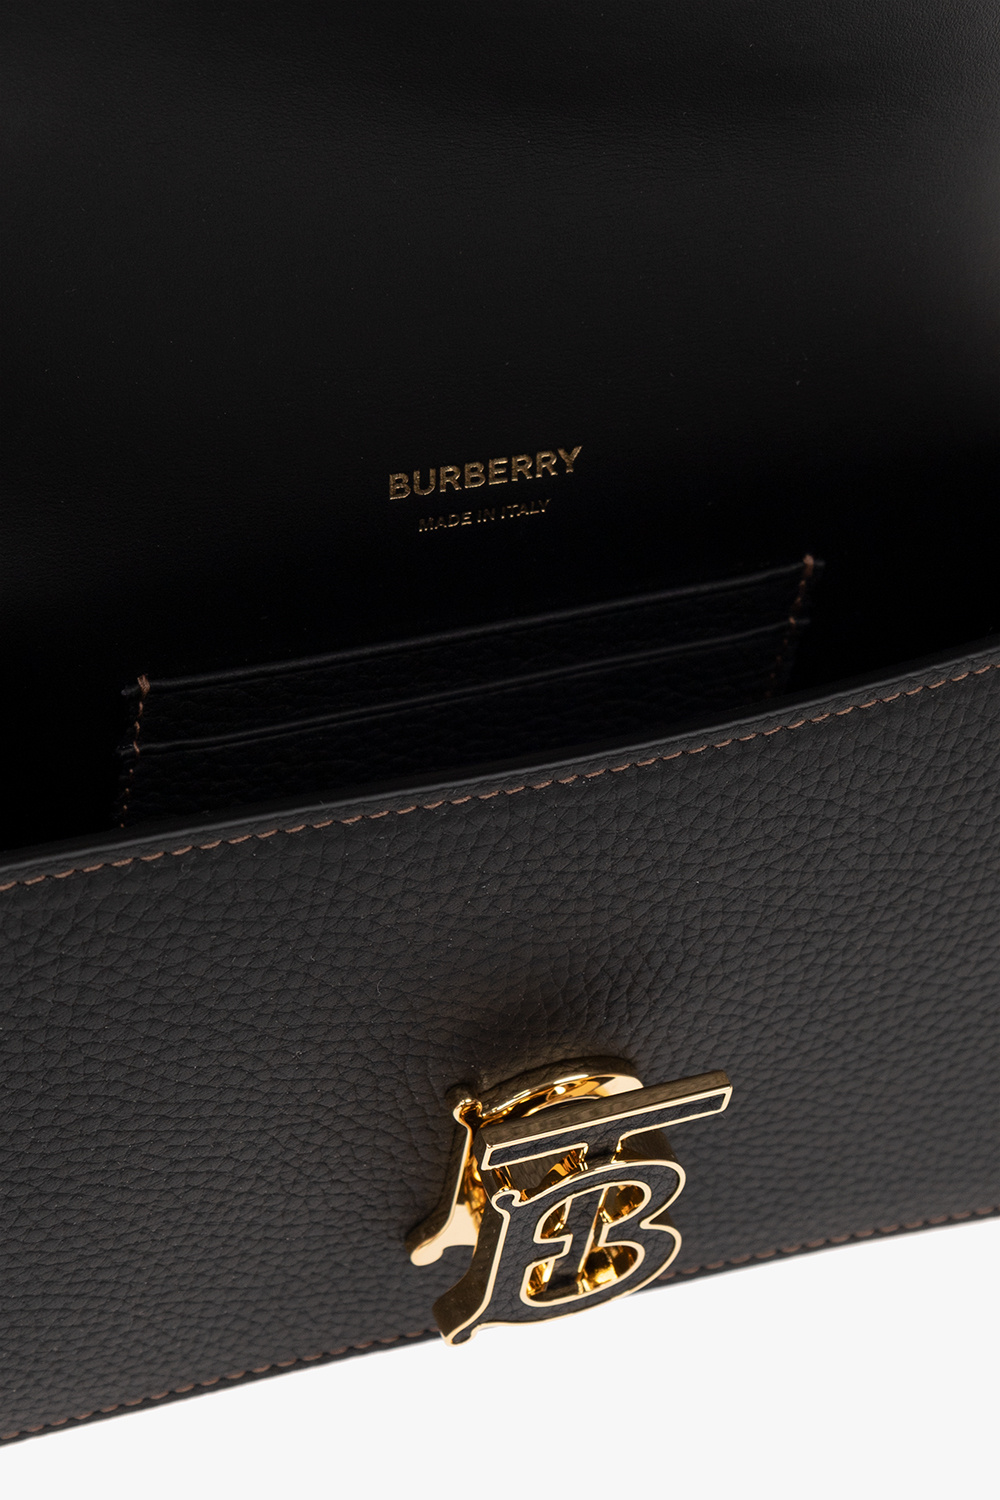 burberry qualityJJ ‘TB Mini’ shoulder bag